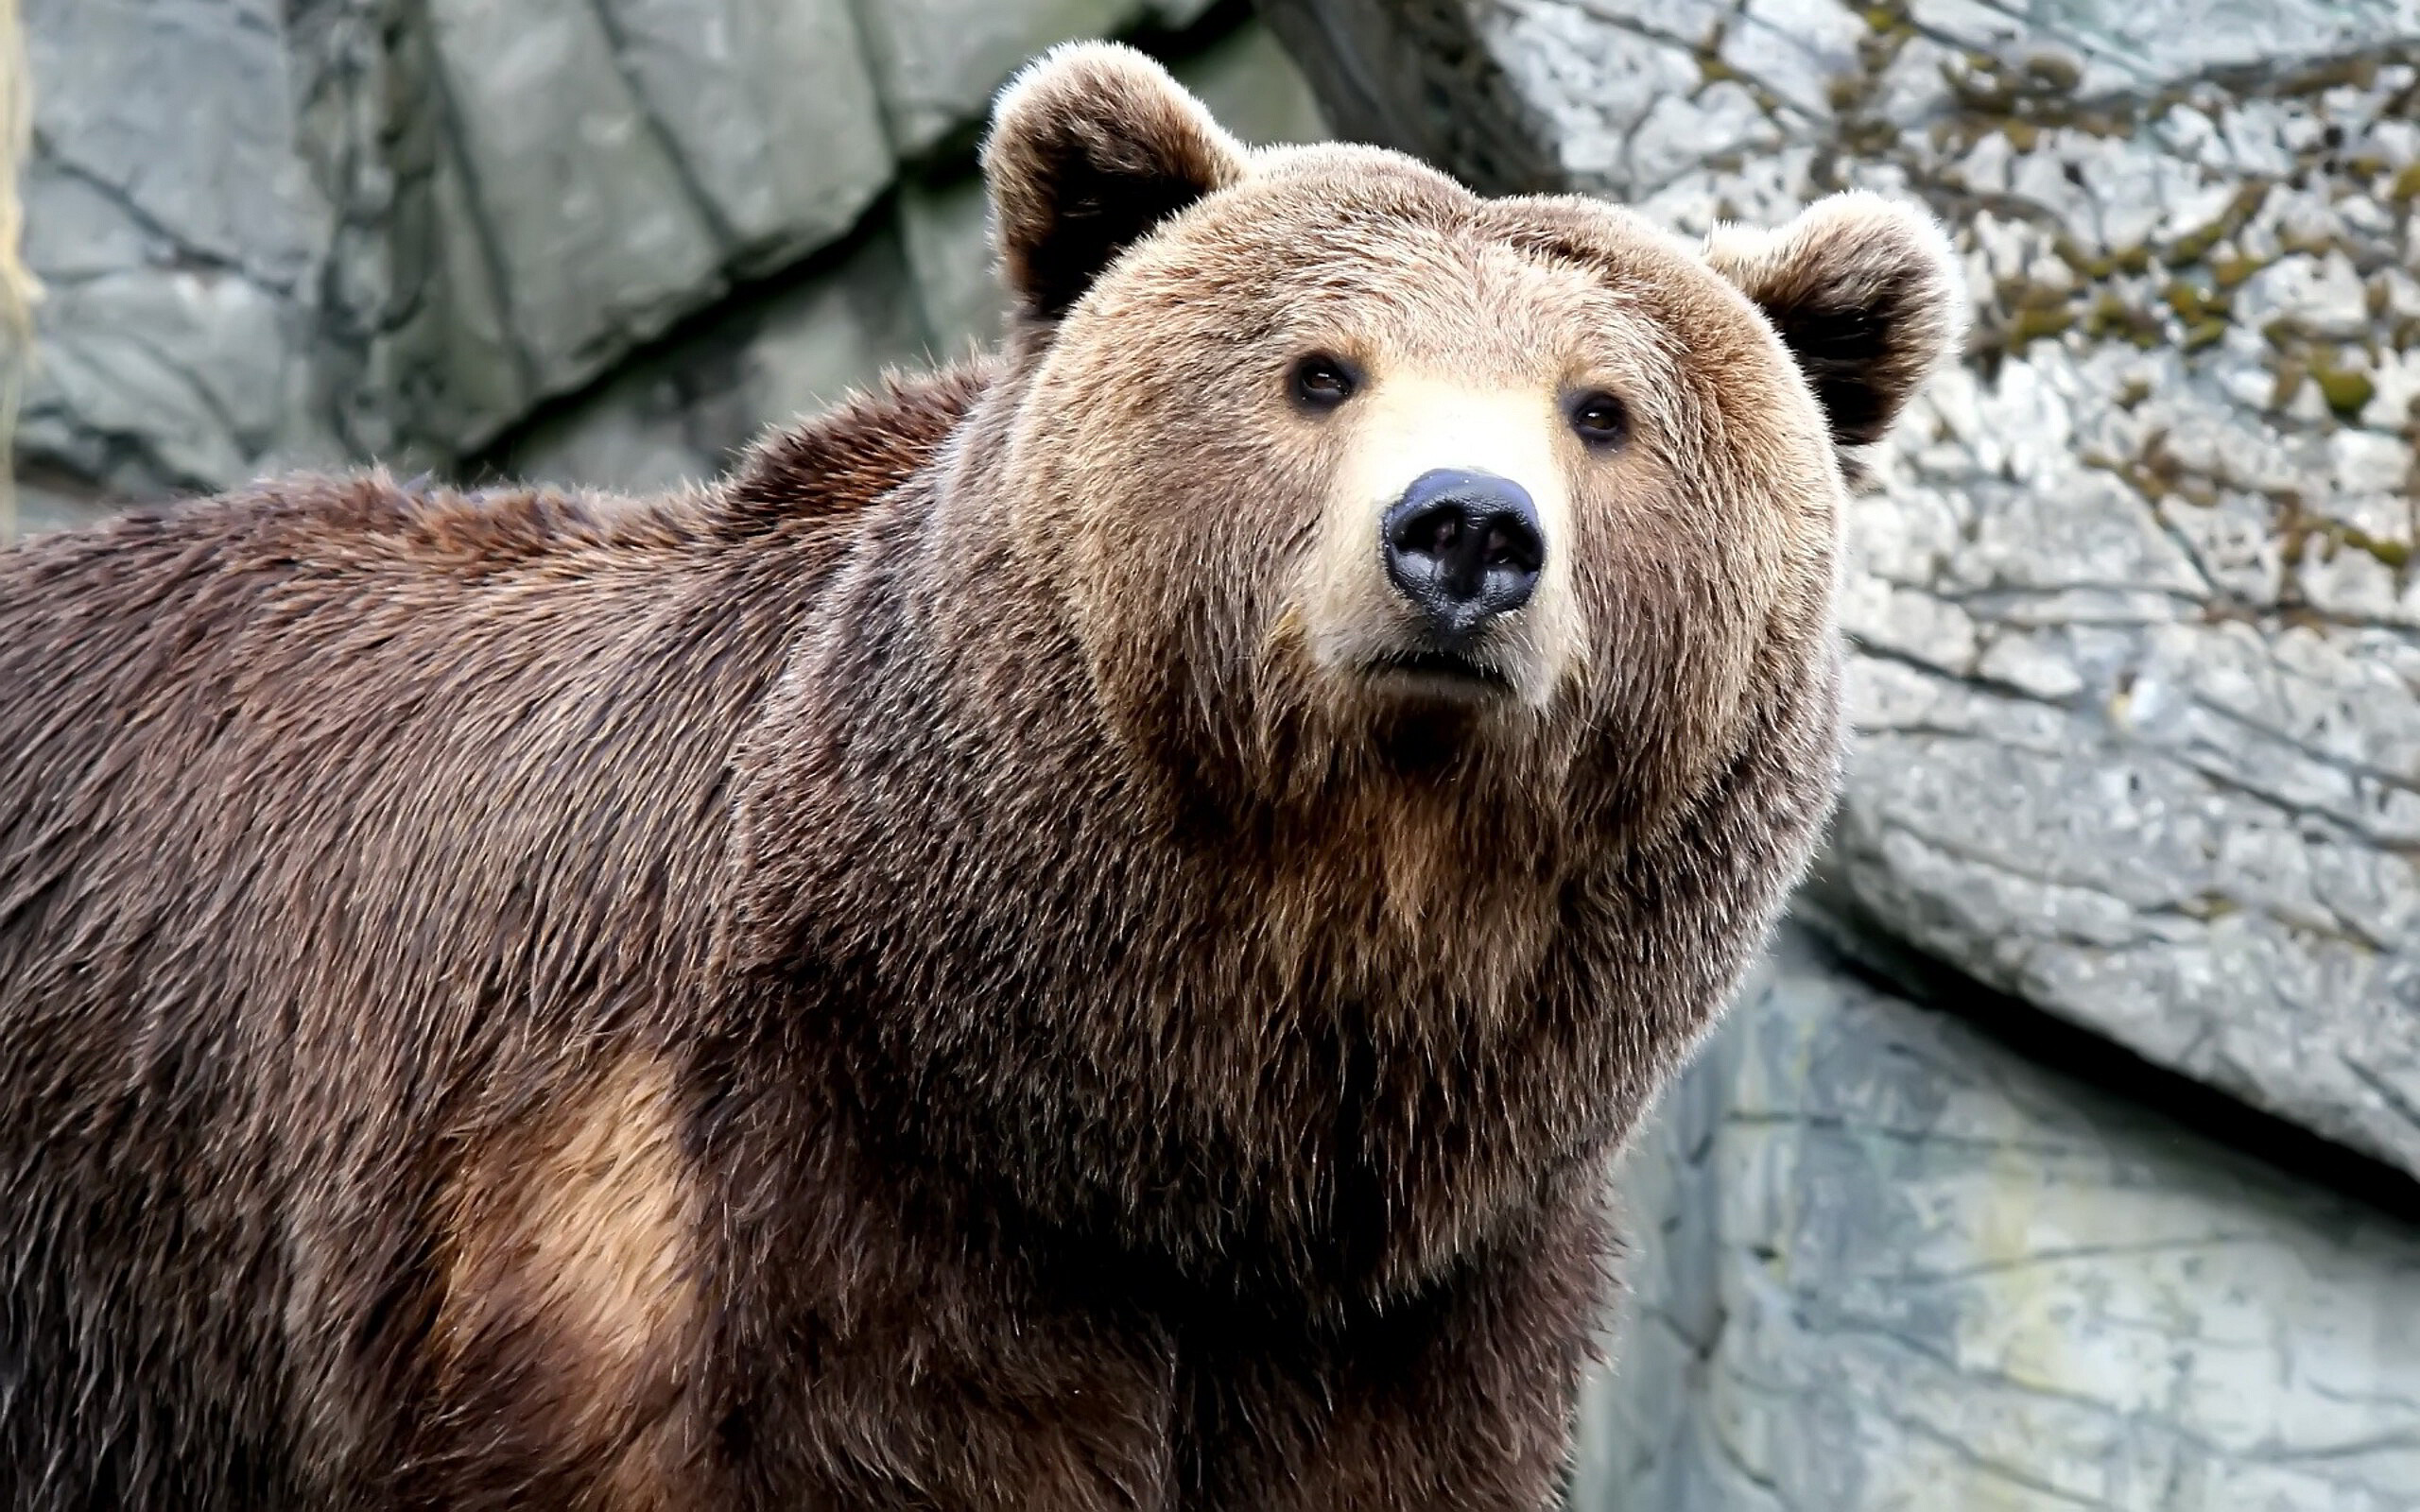 Bear: Mammals, Communicate using body language, sounds and smells. 2560x1600 HD Wallpaper.